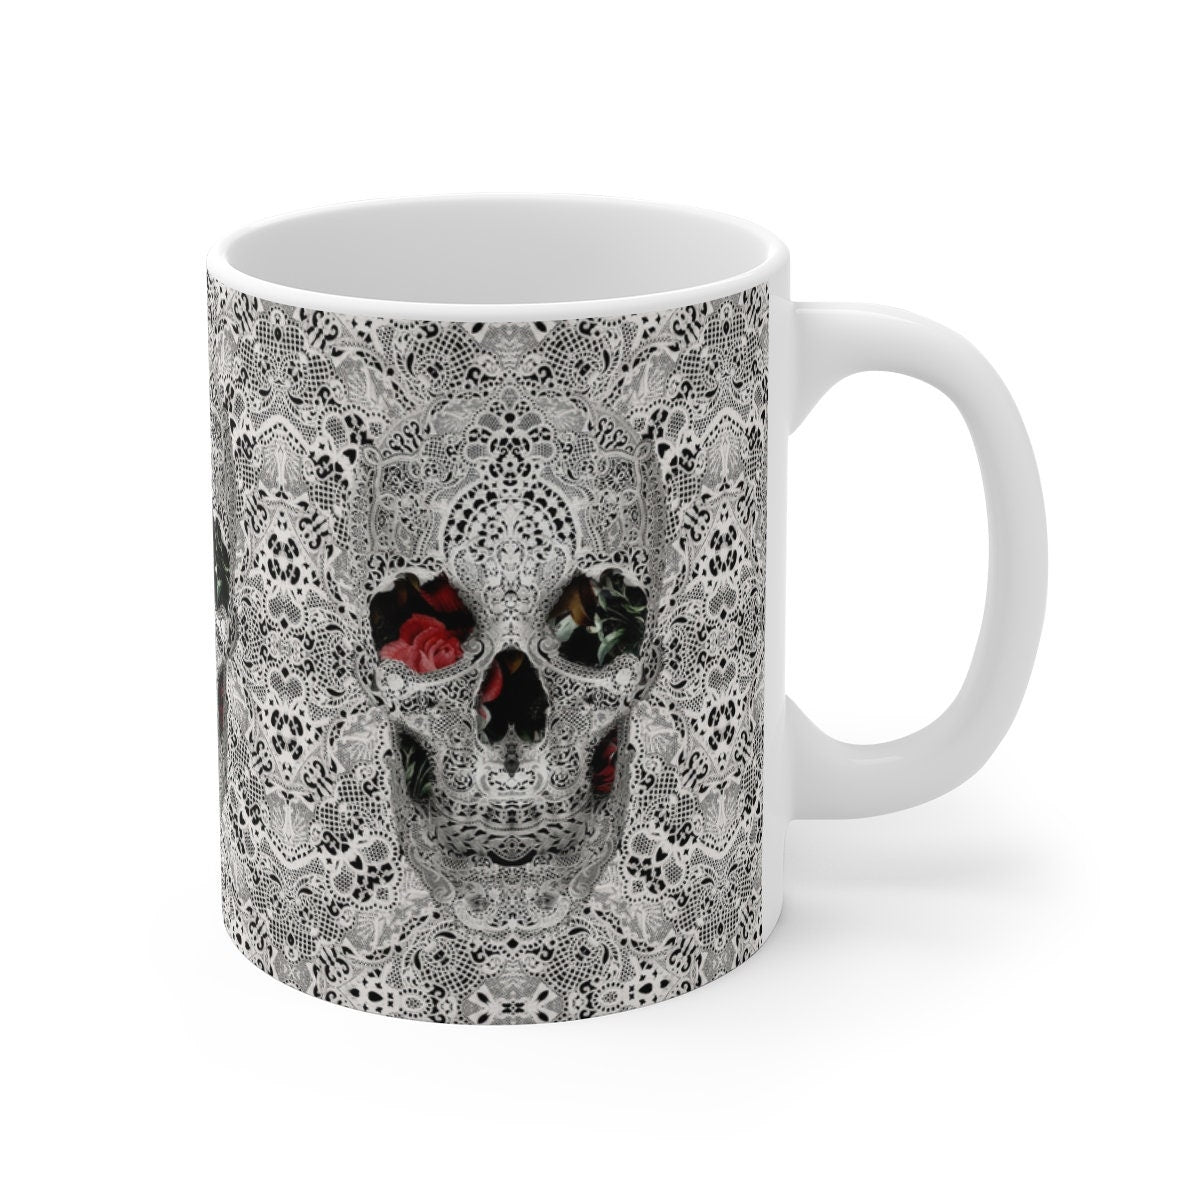 Skull Mug Gift, Sugar Skull Pattern Mug, Lace Skull Ceramic Coffee Mug, Gothic Floral Skull Mug, Sugar Skull Art Gothic Kitchenware Gift